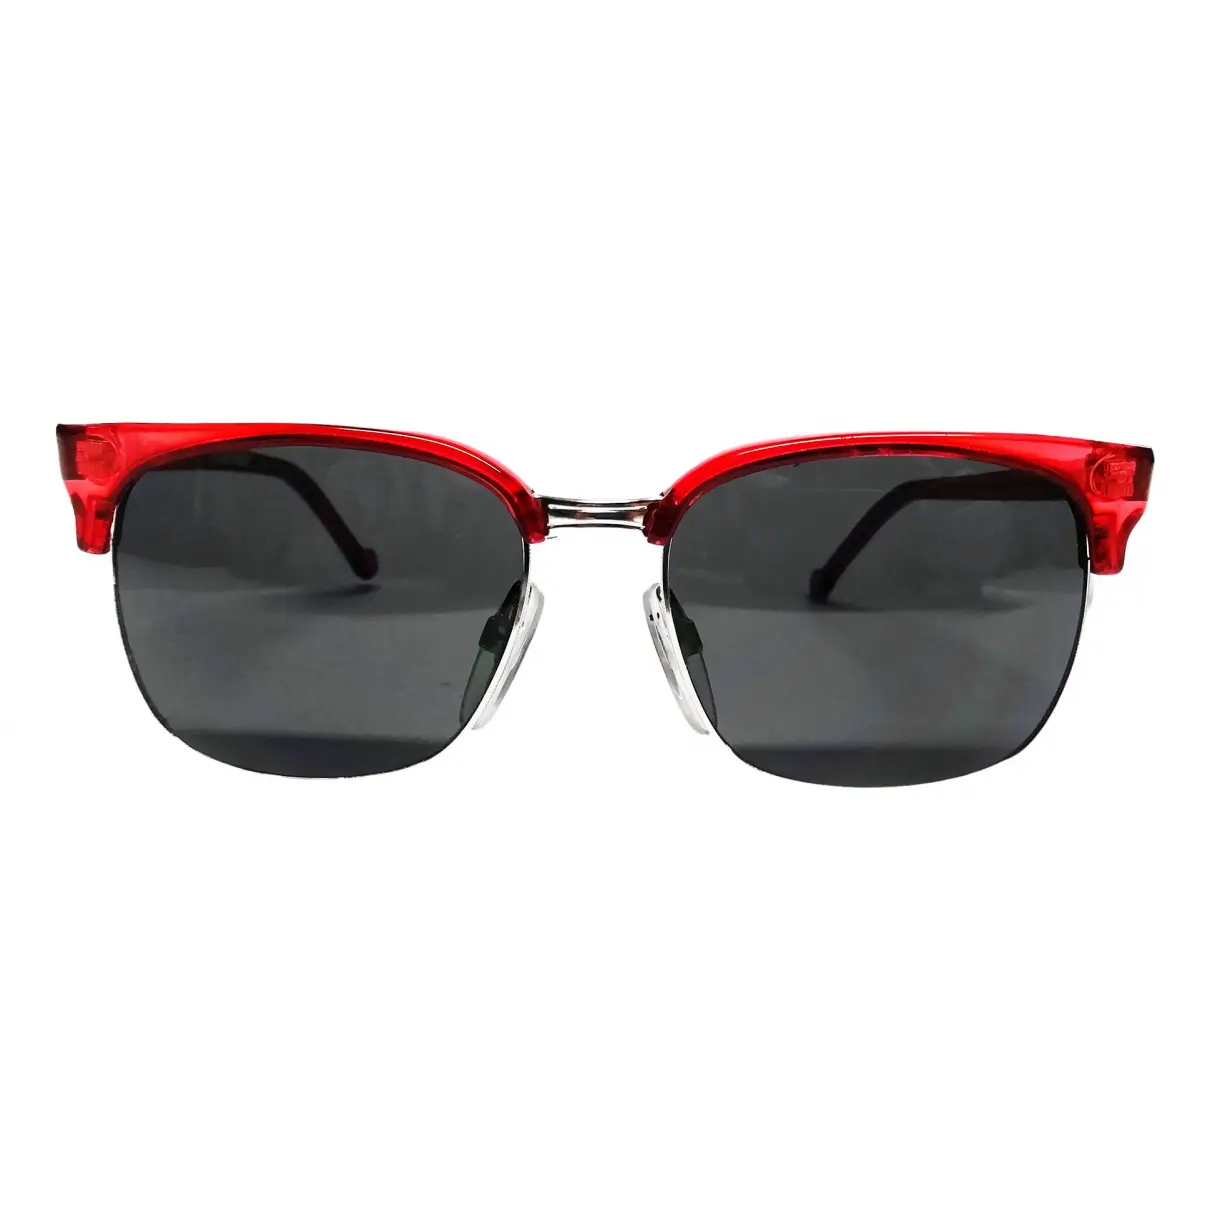 Sunglasses Fiorucci - Vintage